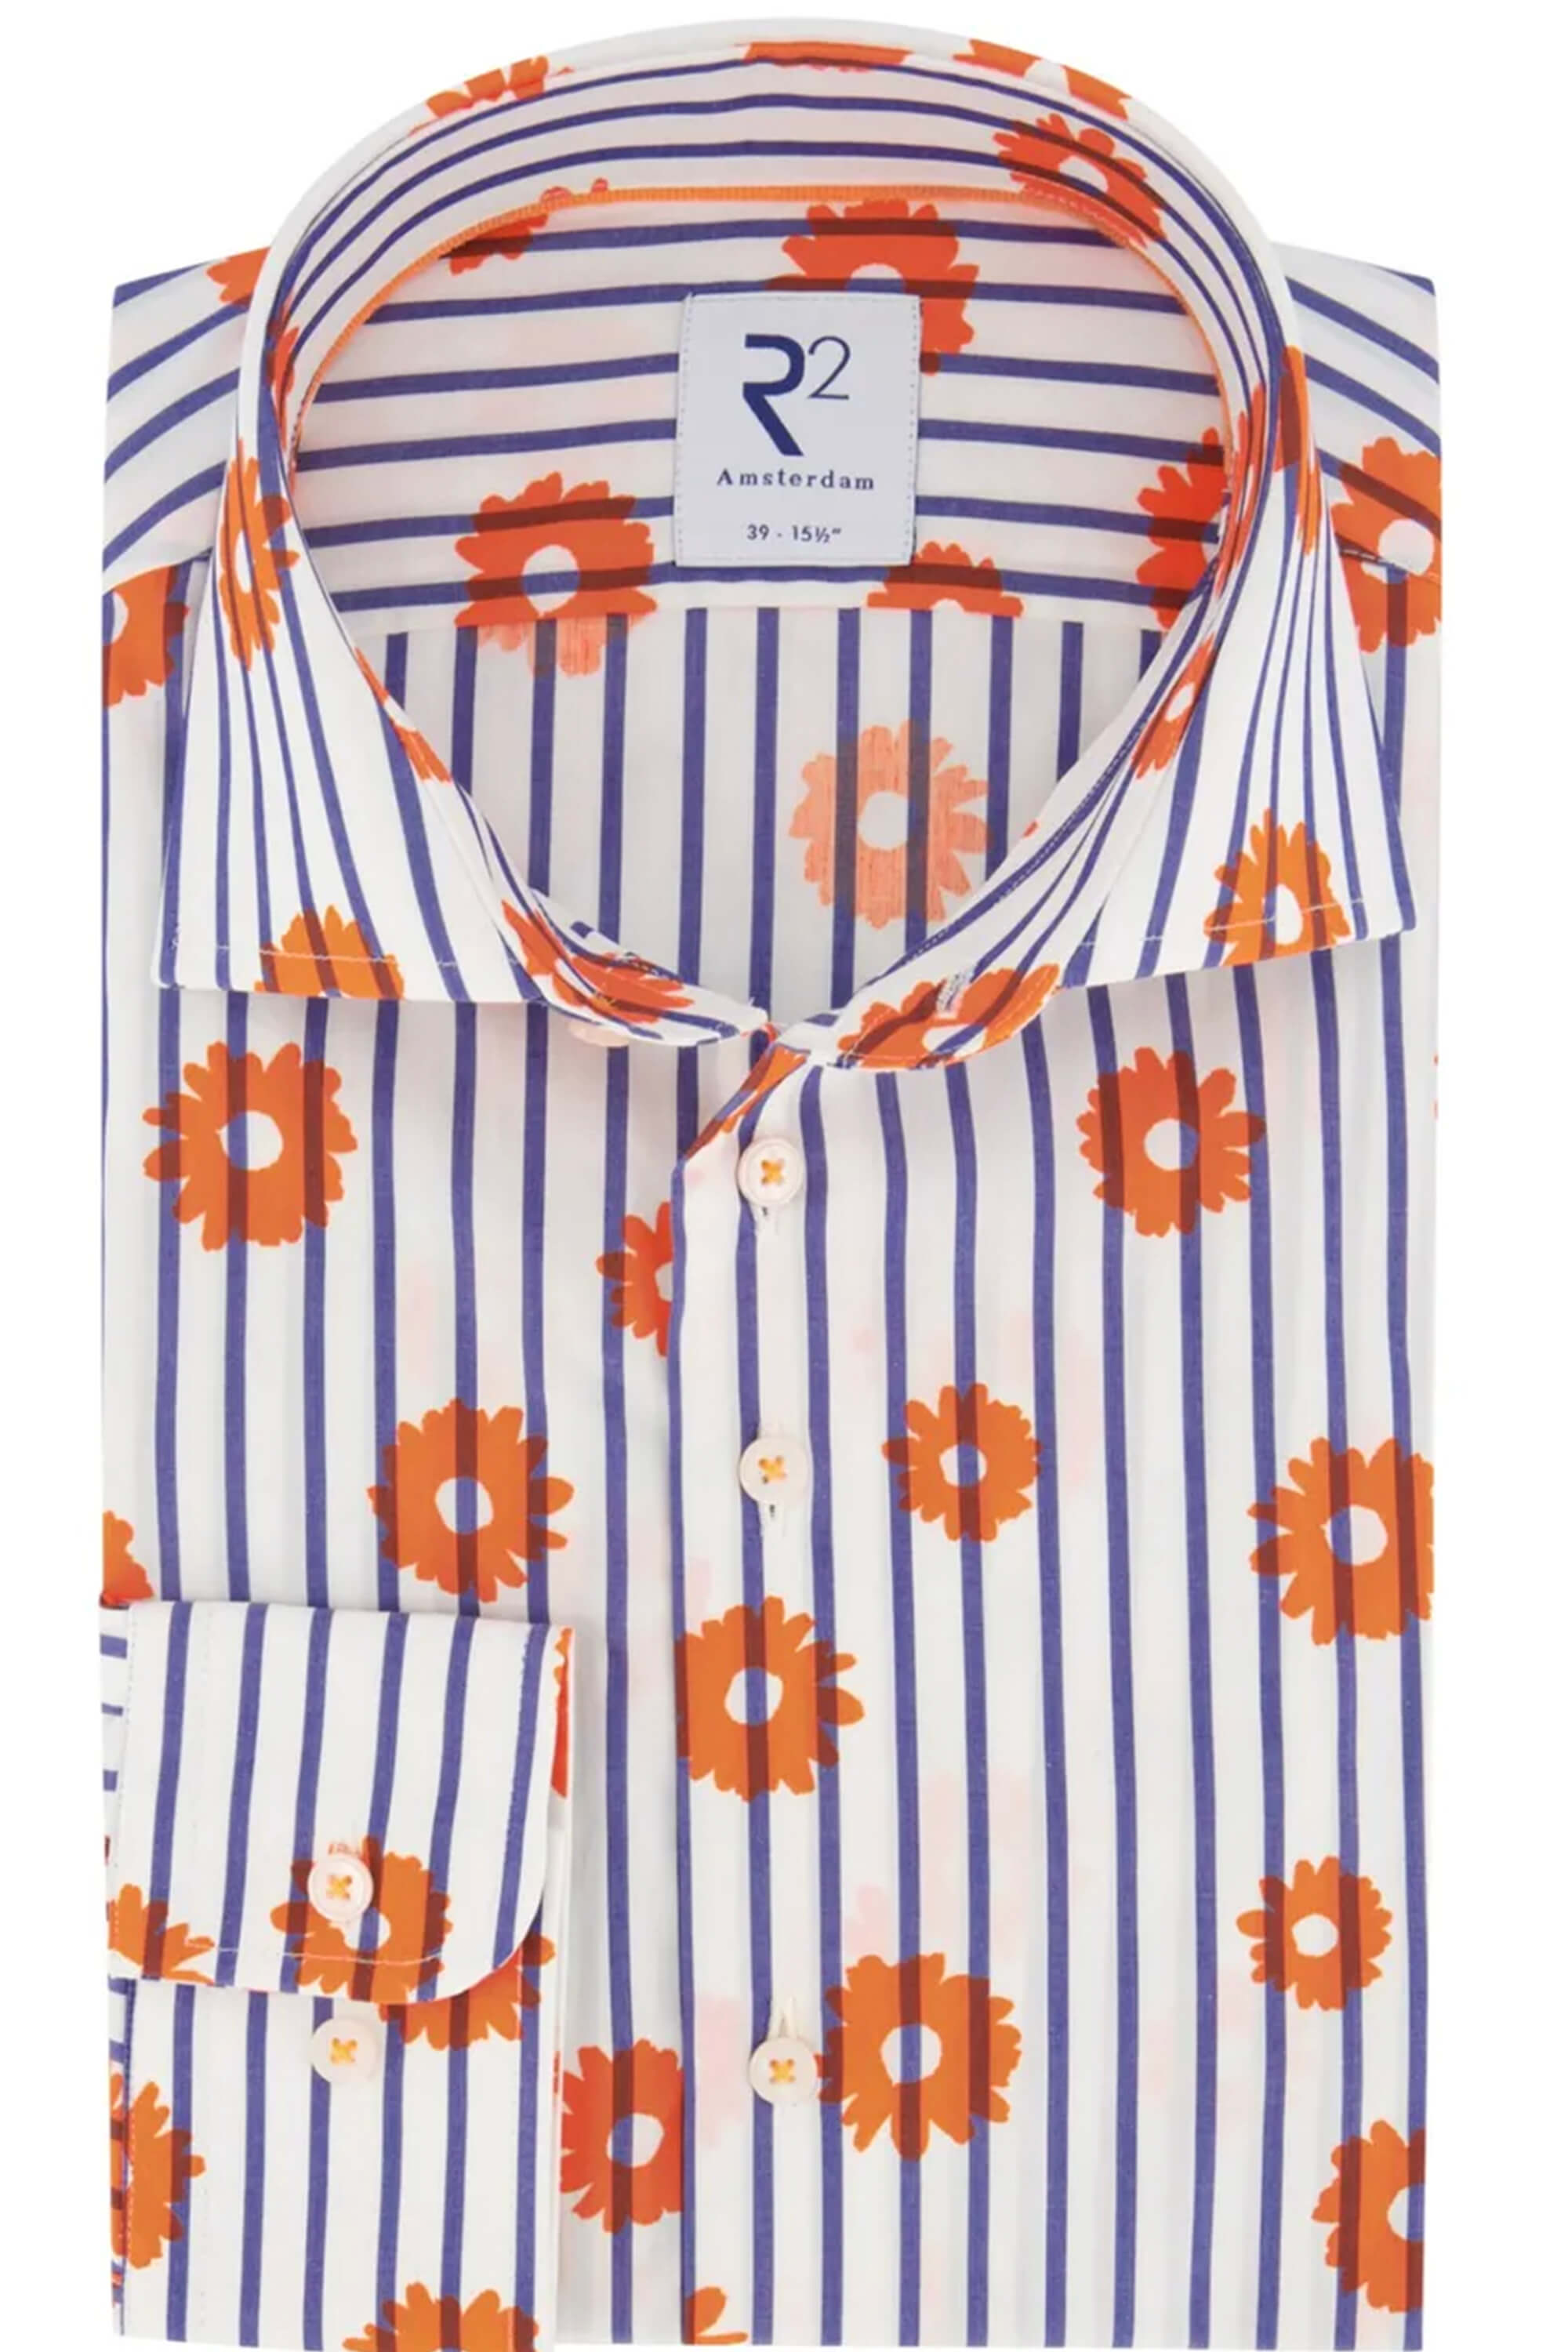 R2 Orange Flower Shirt